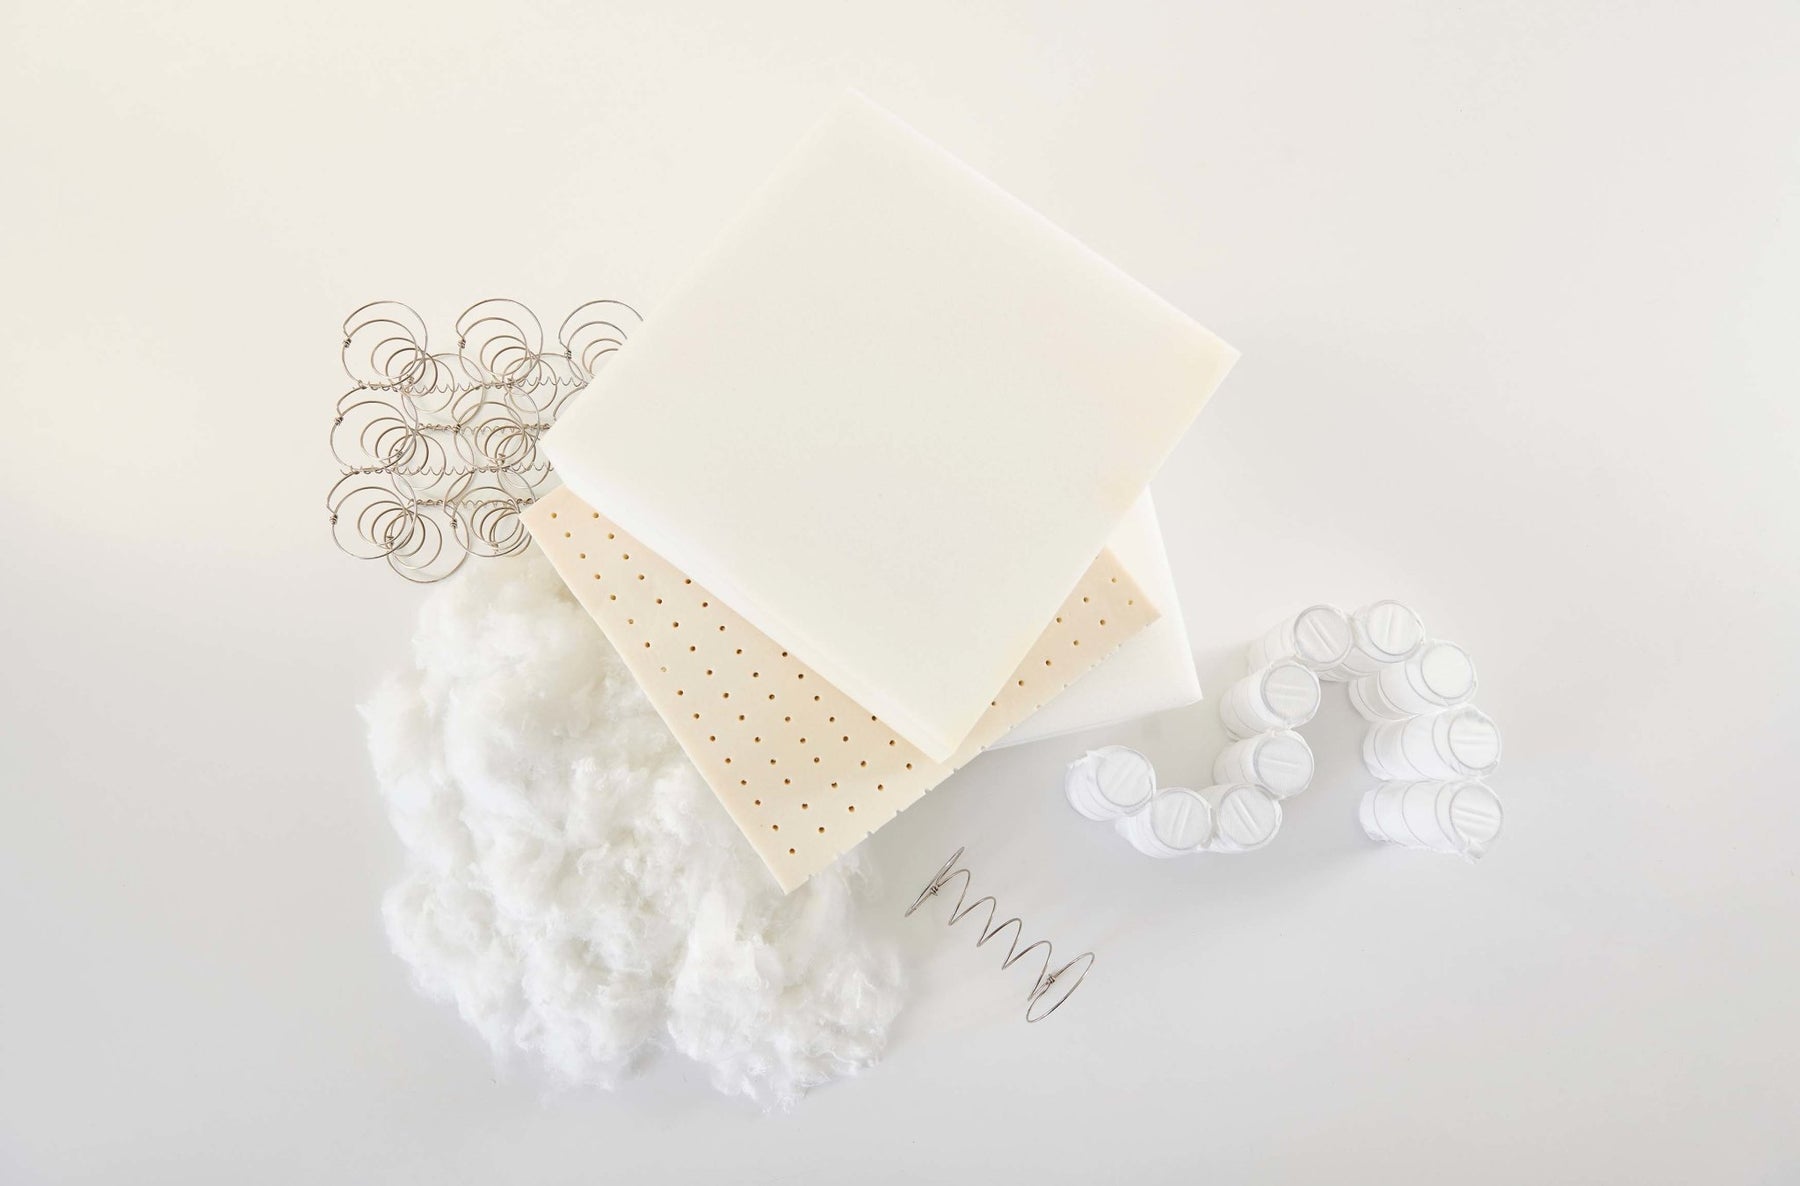 Pillow Top vs. Memory Foam Mattresses: A Simple Comparison